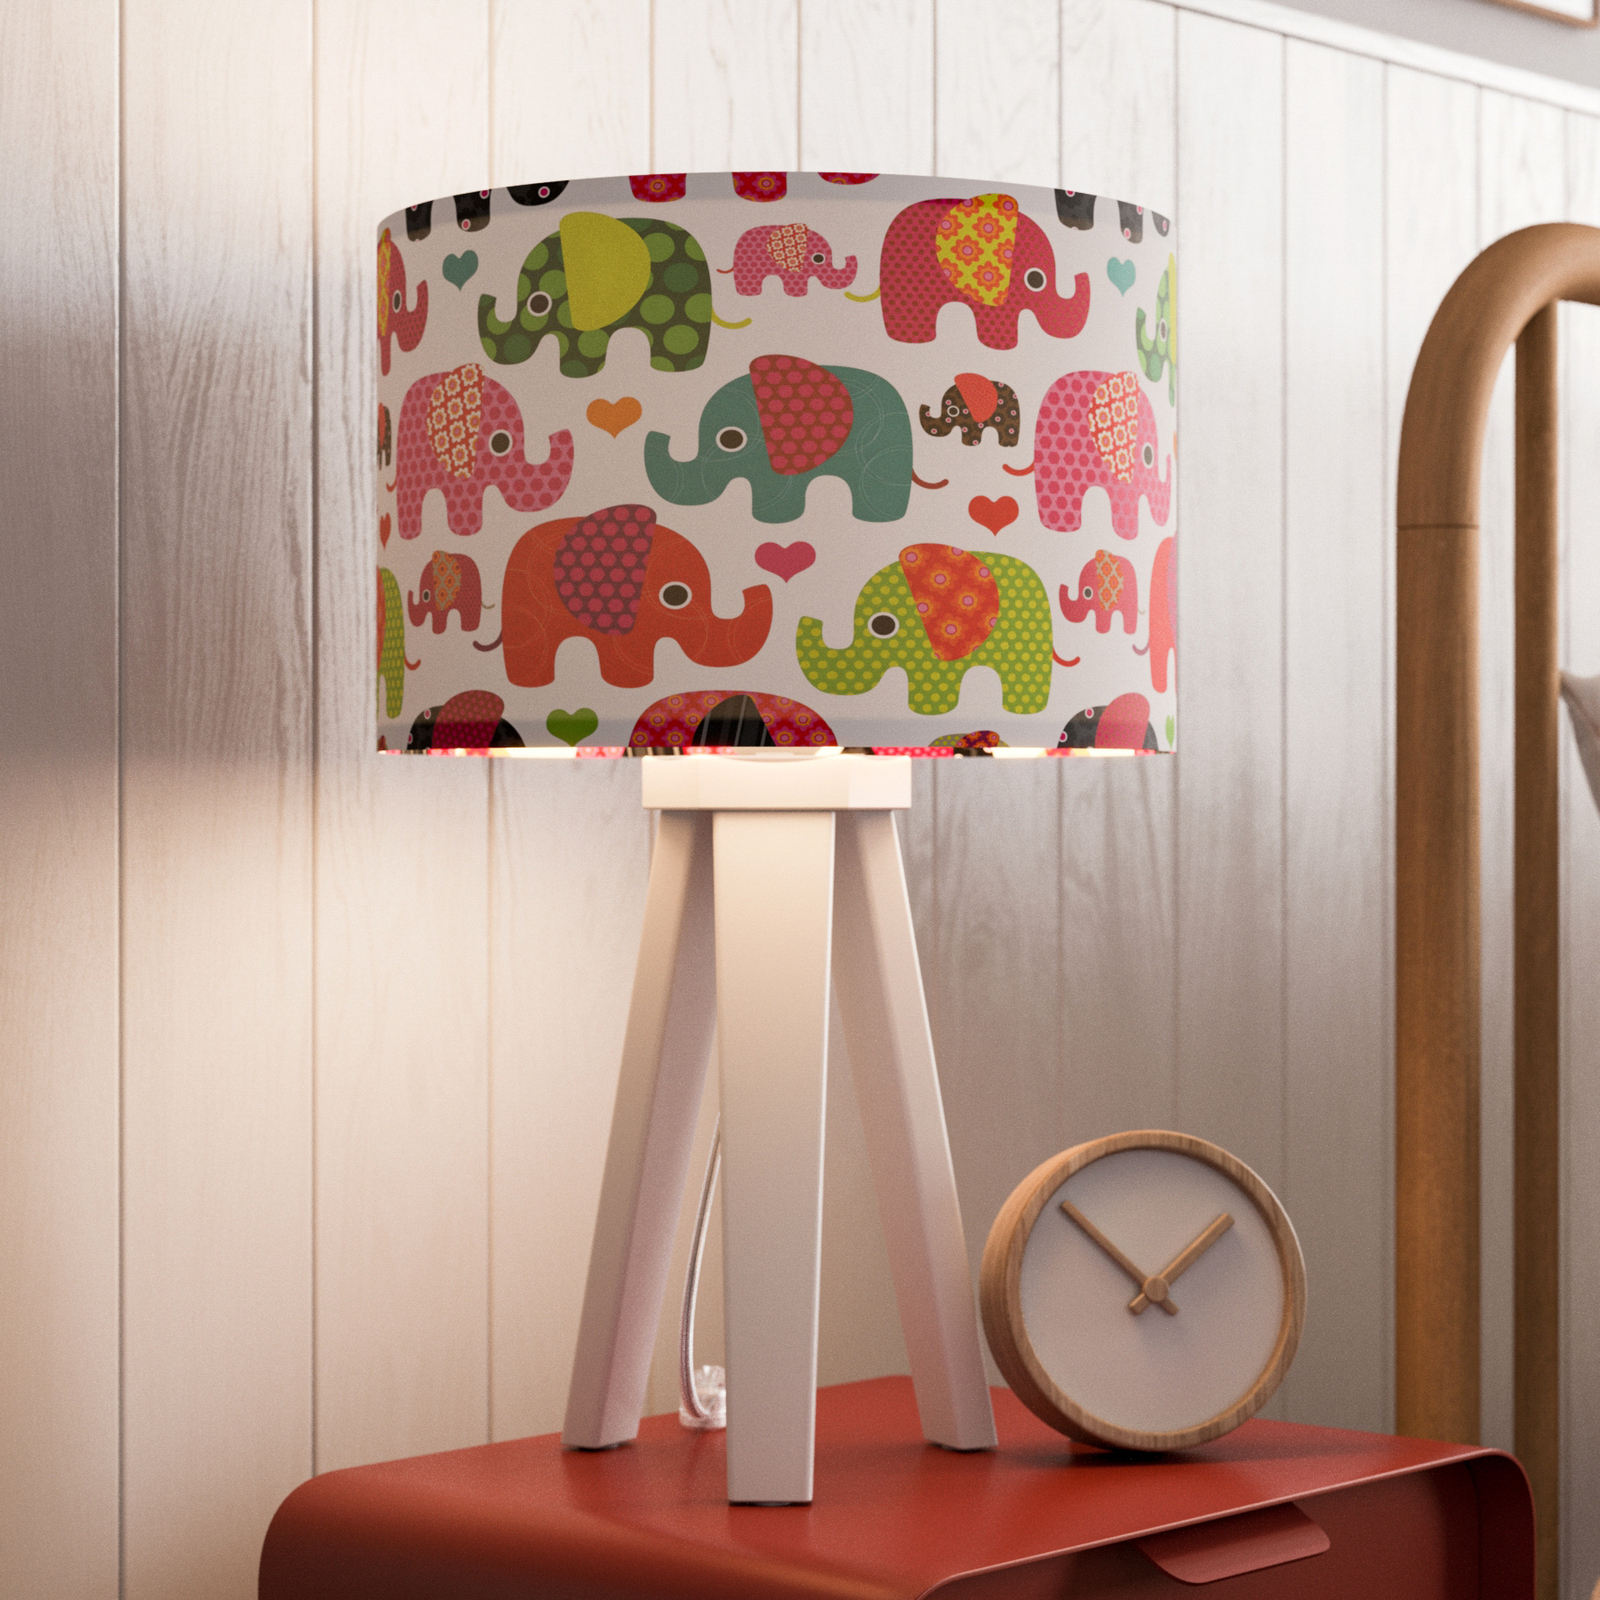 Child-friendly Elephant table lamp